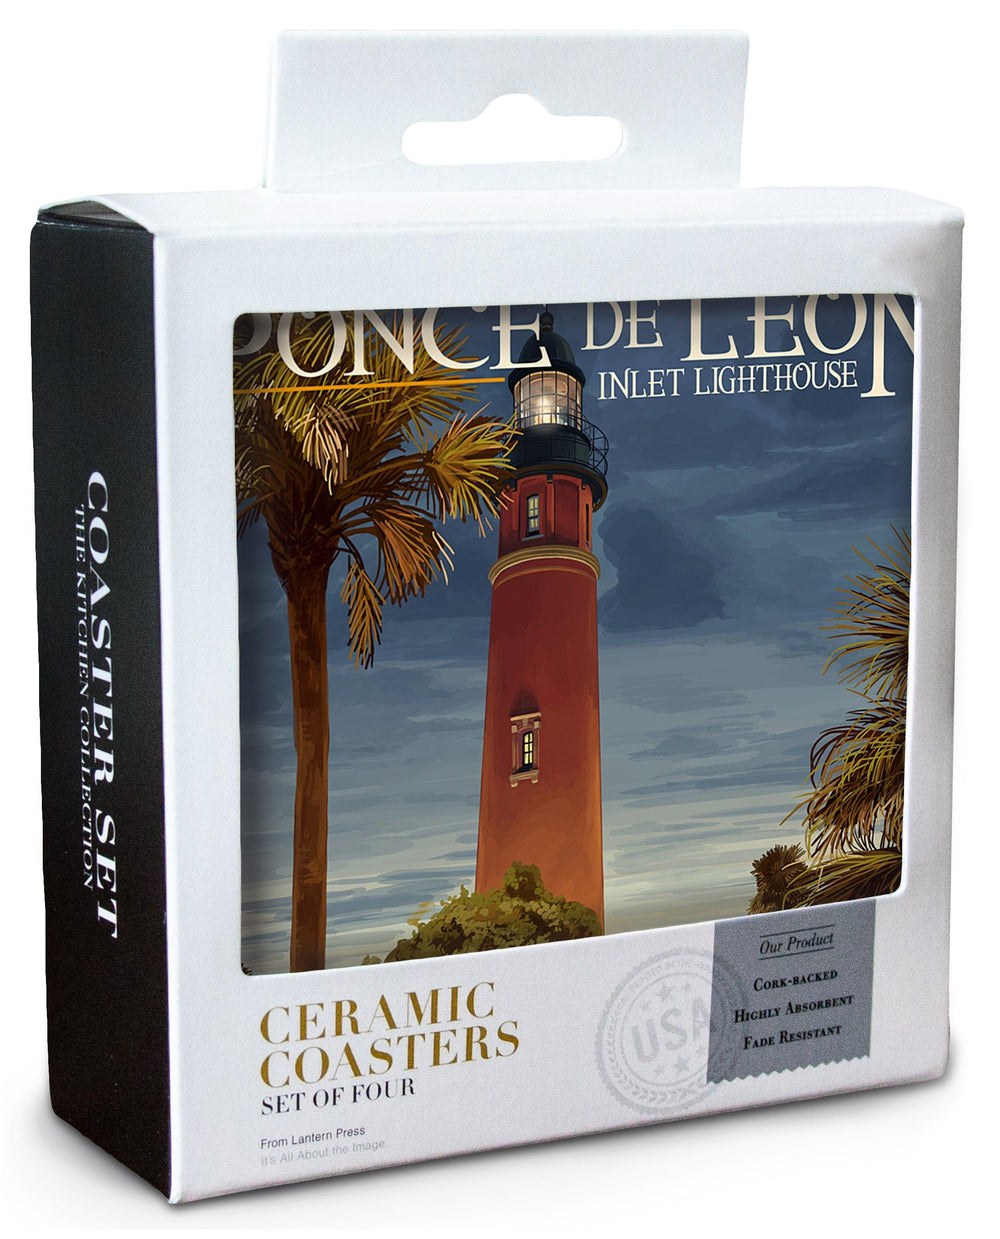 Ponce De Leon Inlet Lighthouse, Florida, Dusk Scene, Lantern Press Artwork, Coaster Set Coasters Lantern Press 